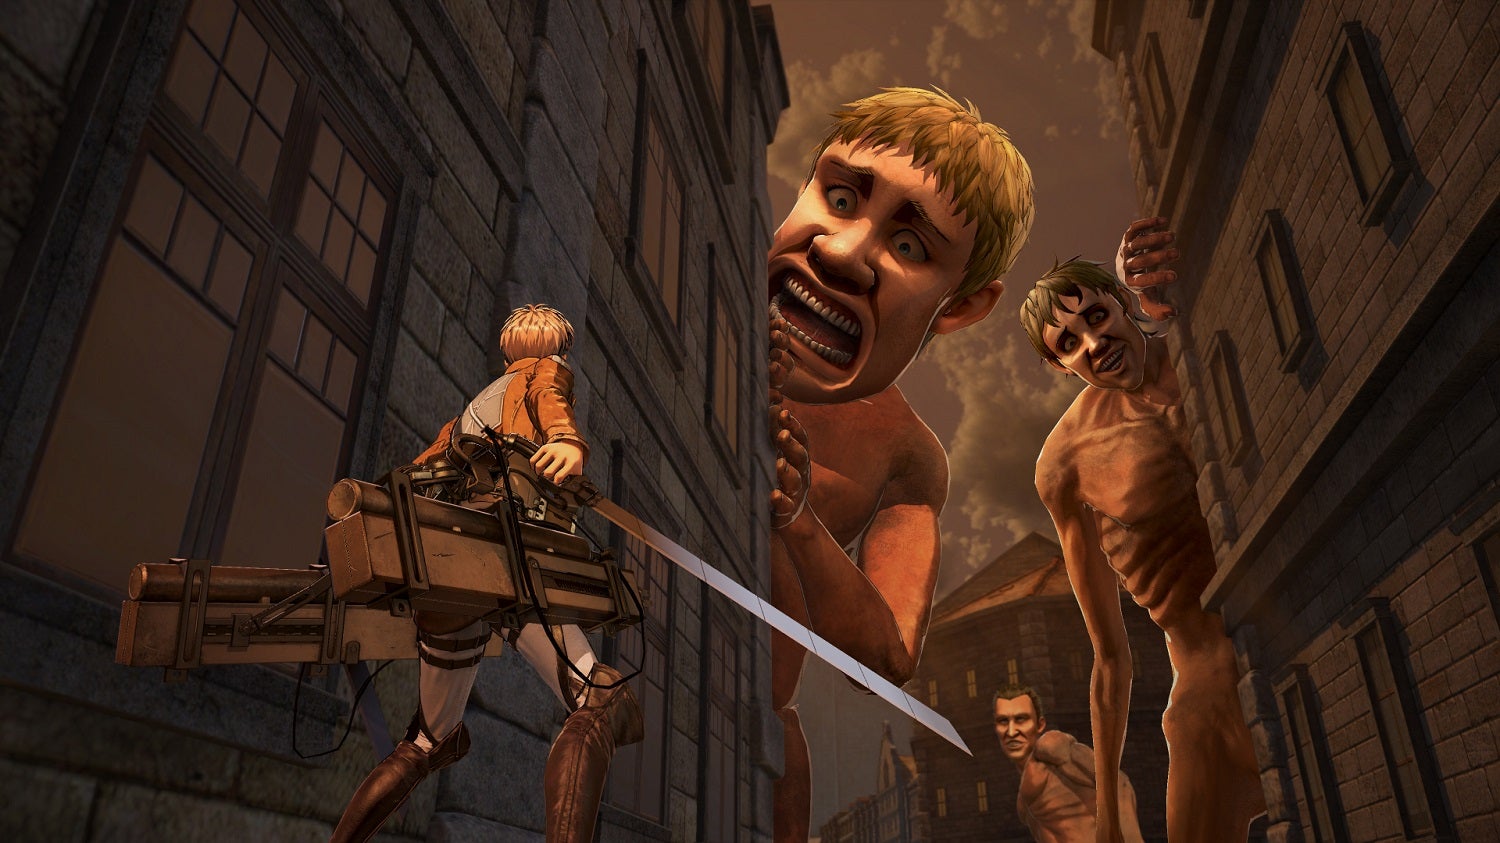 Obrazki dla Attack on Titan 2 - premiera 20 marca na PC, PS4, Xbox One i Switch